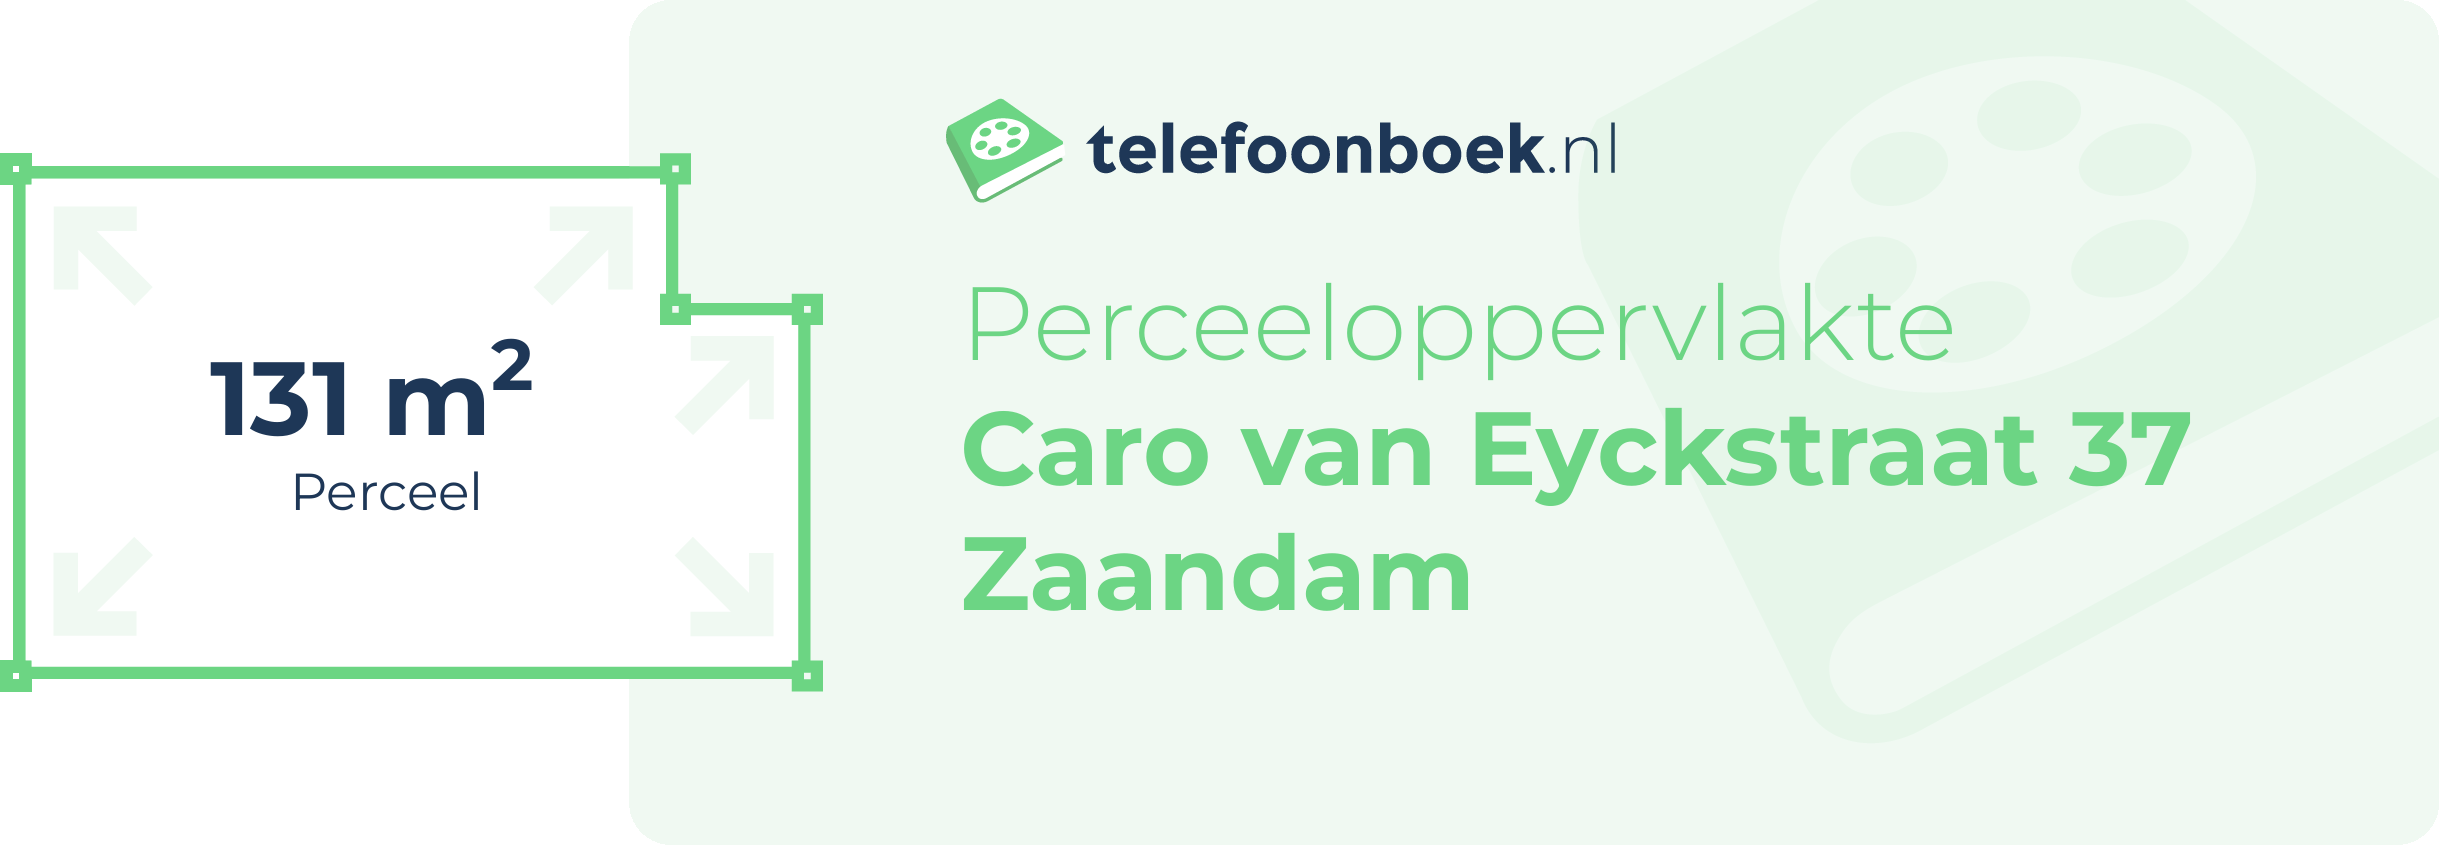 Perceeloppervlakte Caro Van Eyckstraat 37 Zaandam